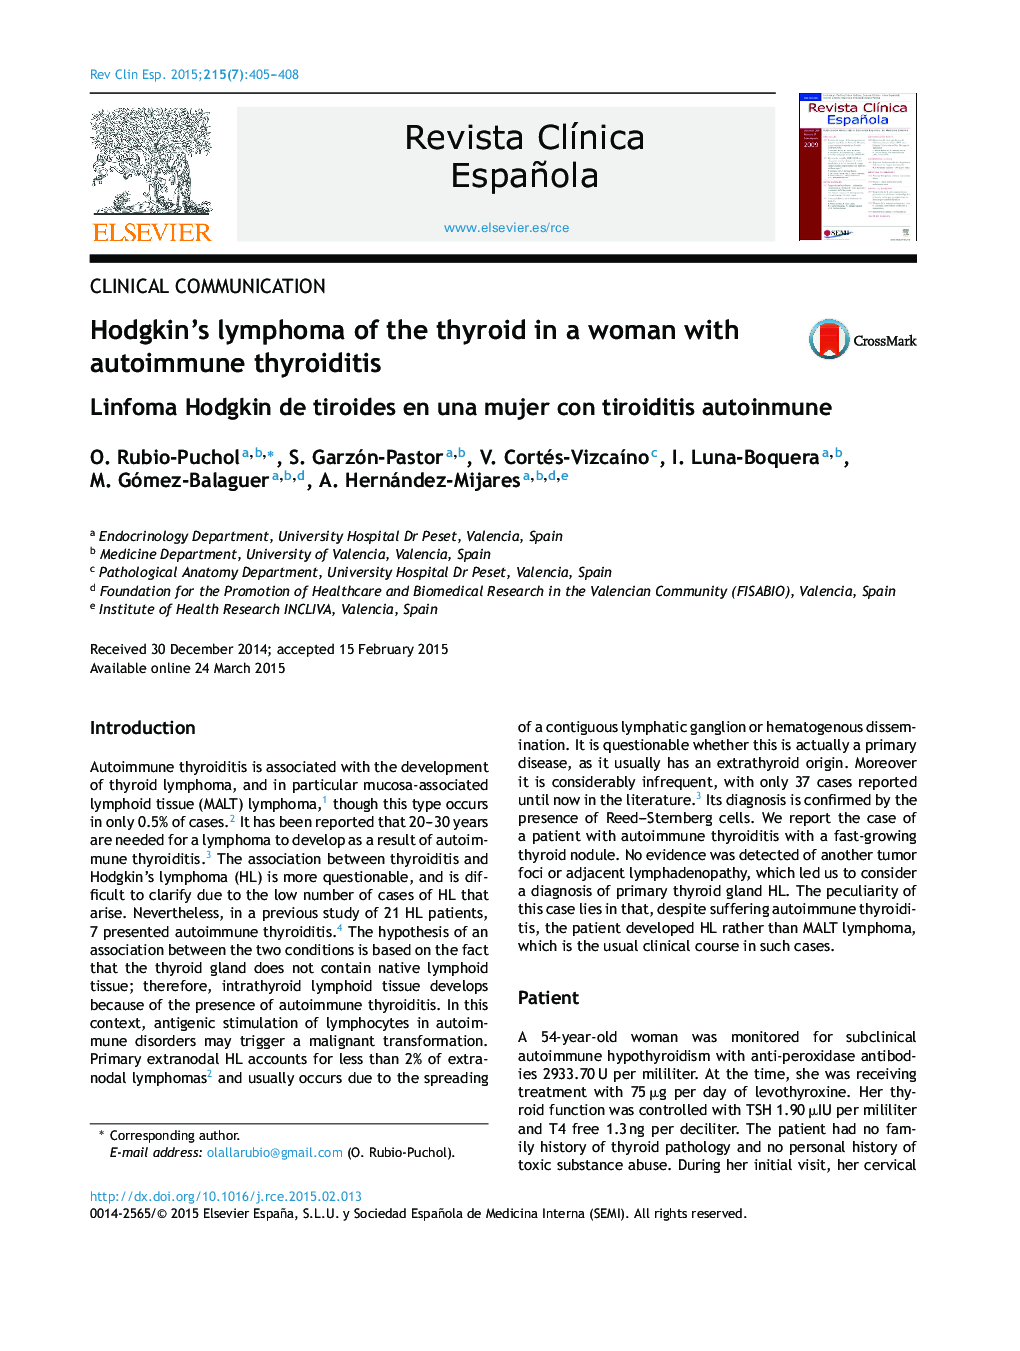 Hodgkin's lymphoma of the thyroid in a woman with autoimmune thyroiditis